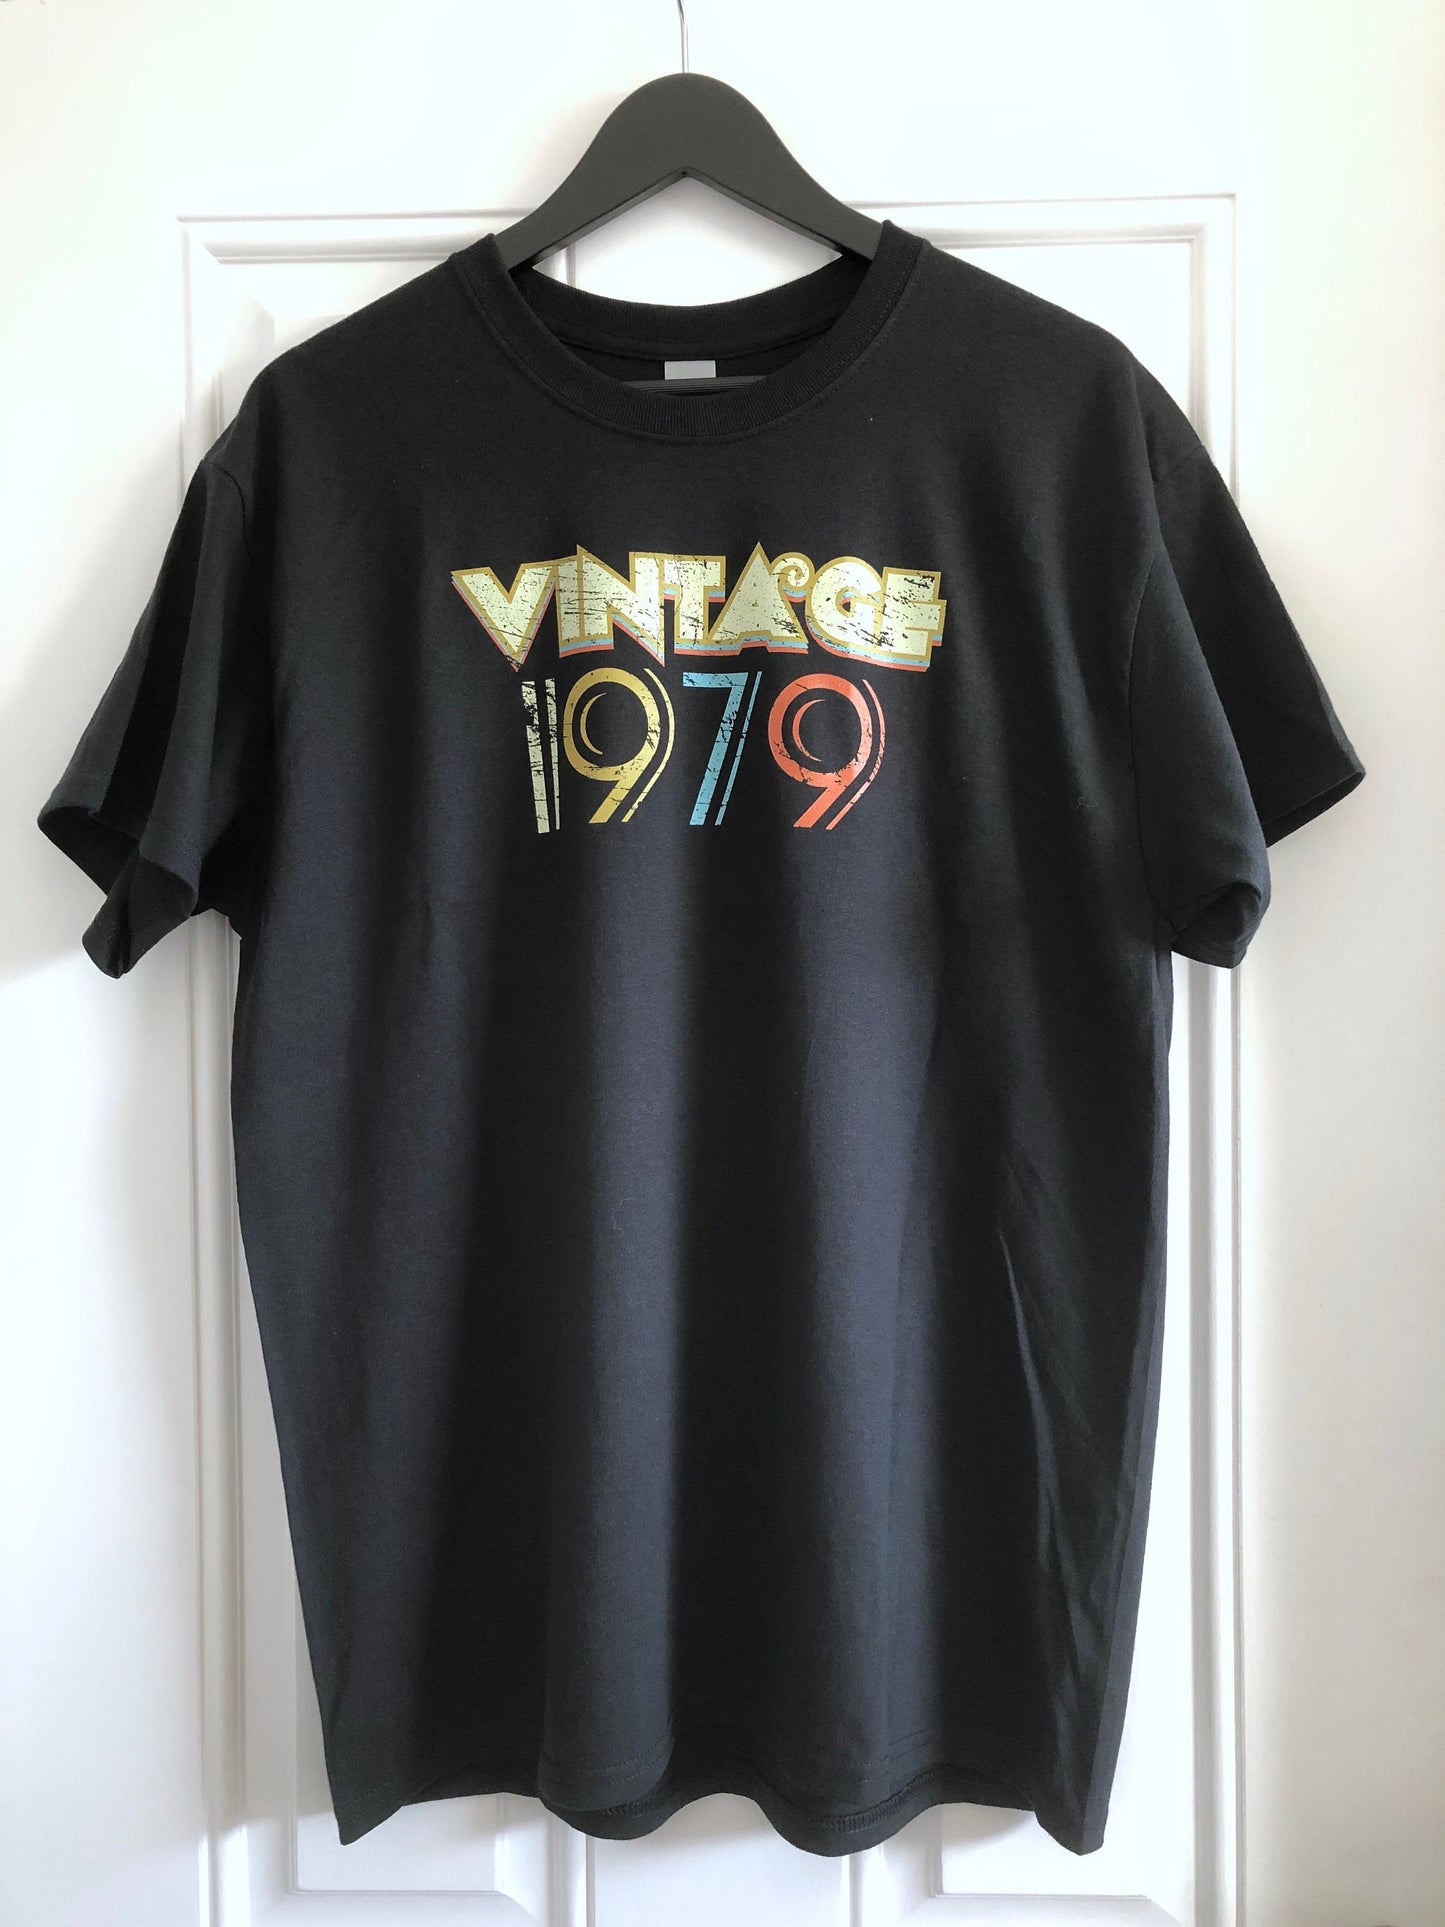 43rd Birthday T-Shirt, Vintage 1979 Gift Idea, Graphic Print Design T Shirt Tee Top